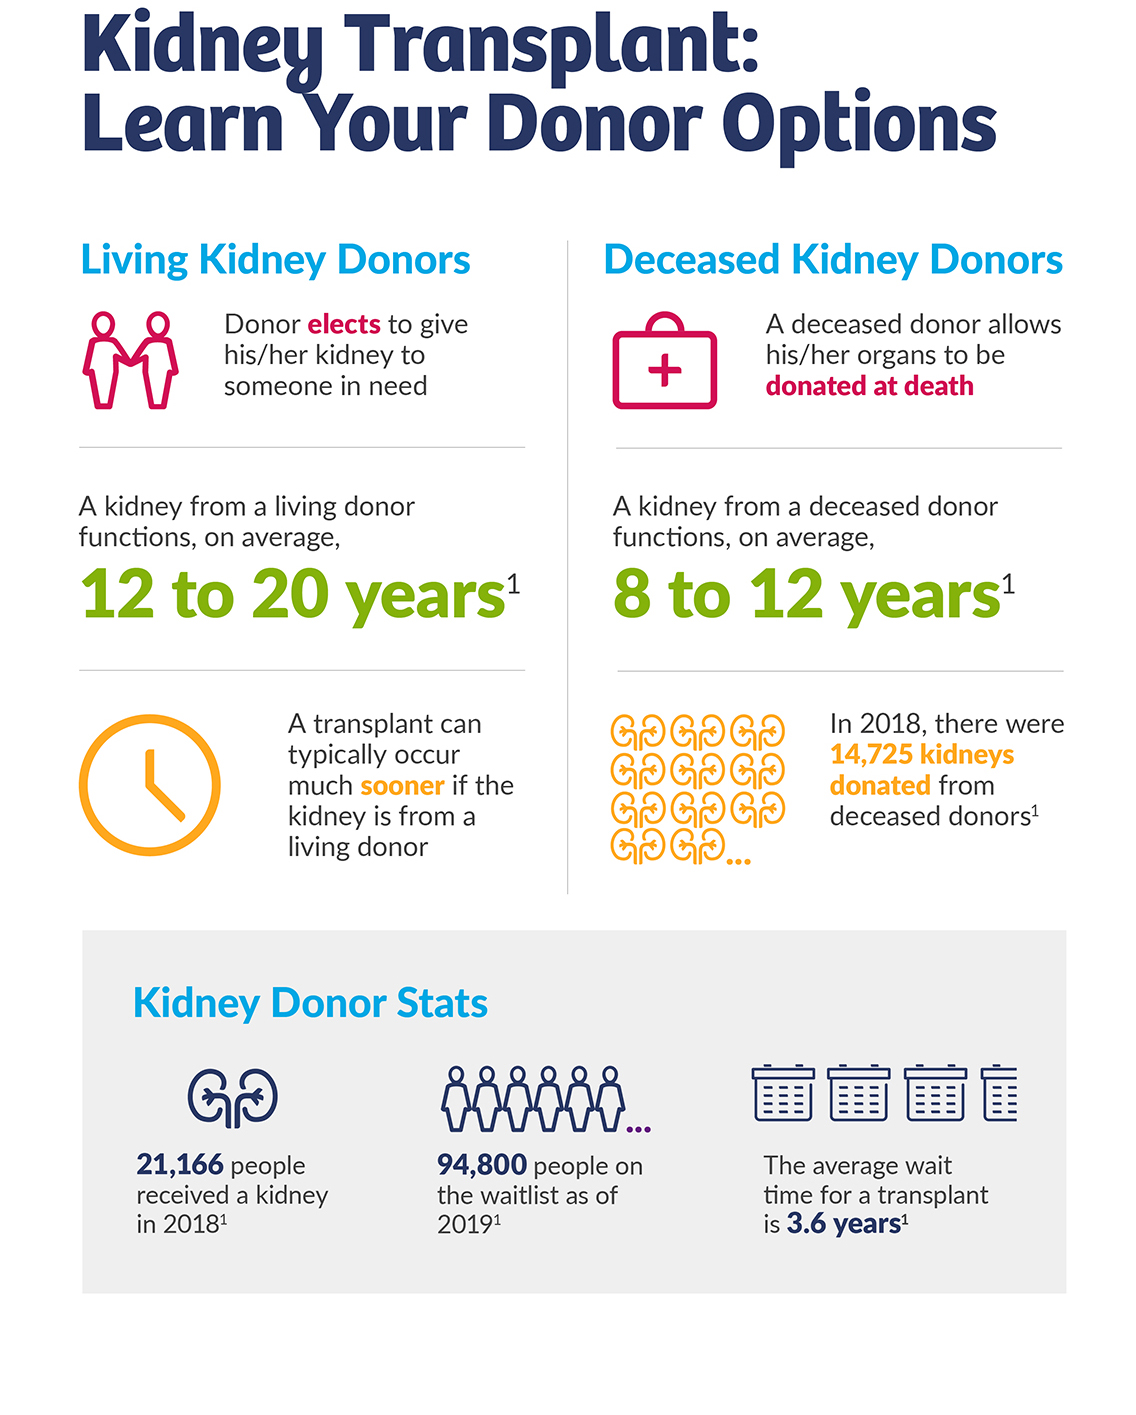 Kidney transplant donor options